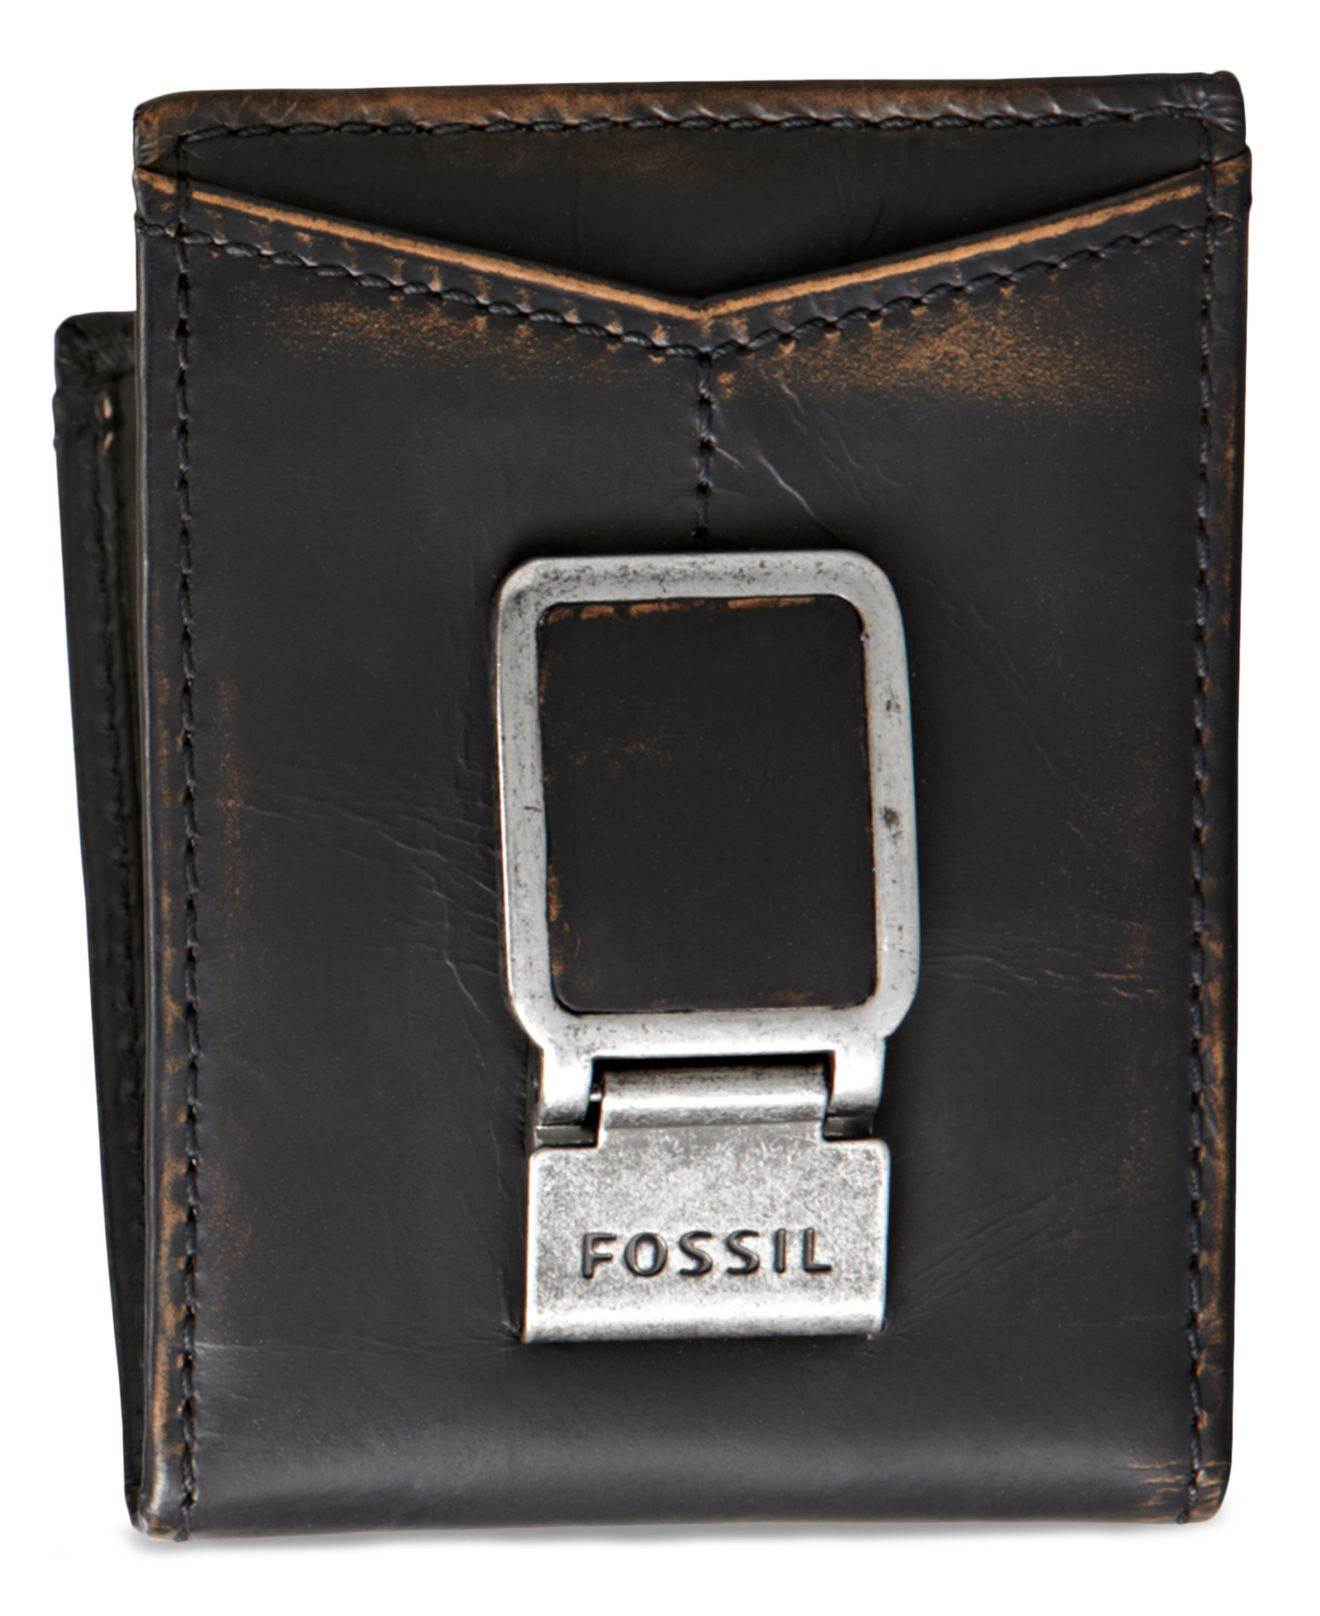 Fossil Carson Id Bifold Wallet in Black for Men - Lyst